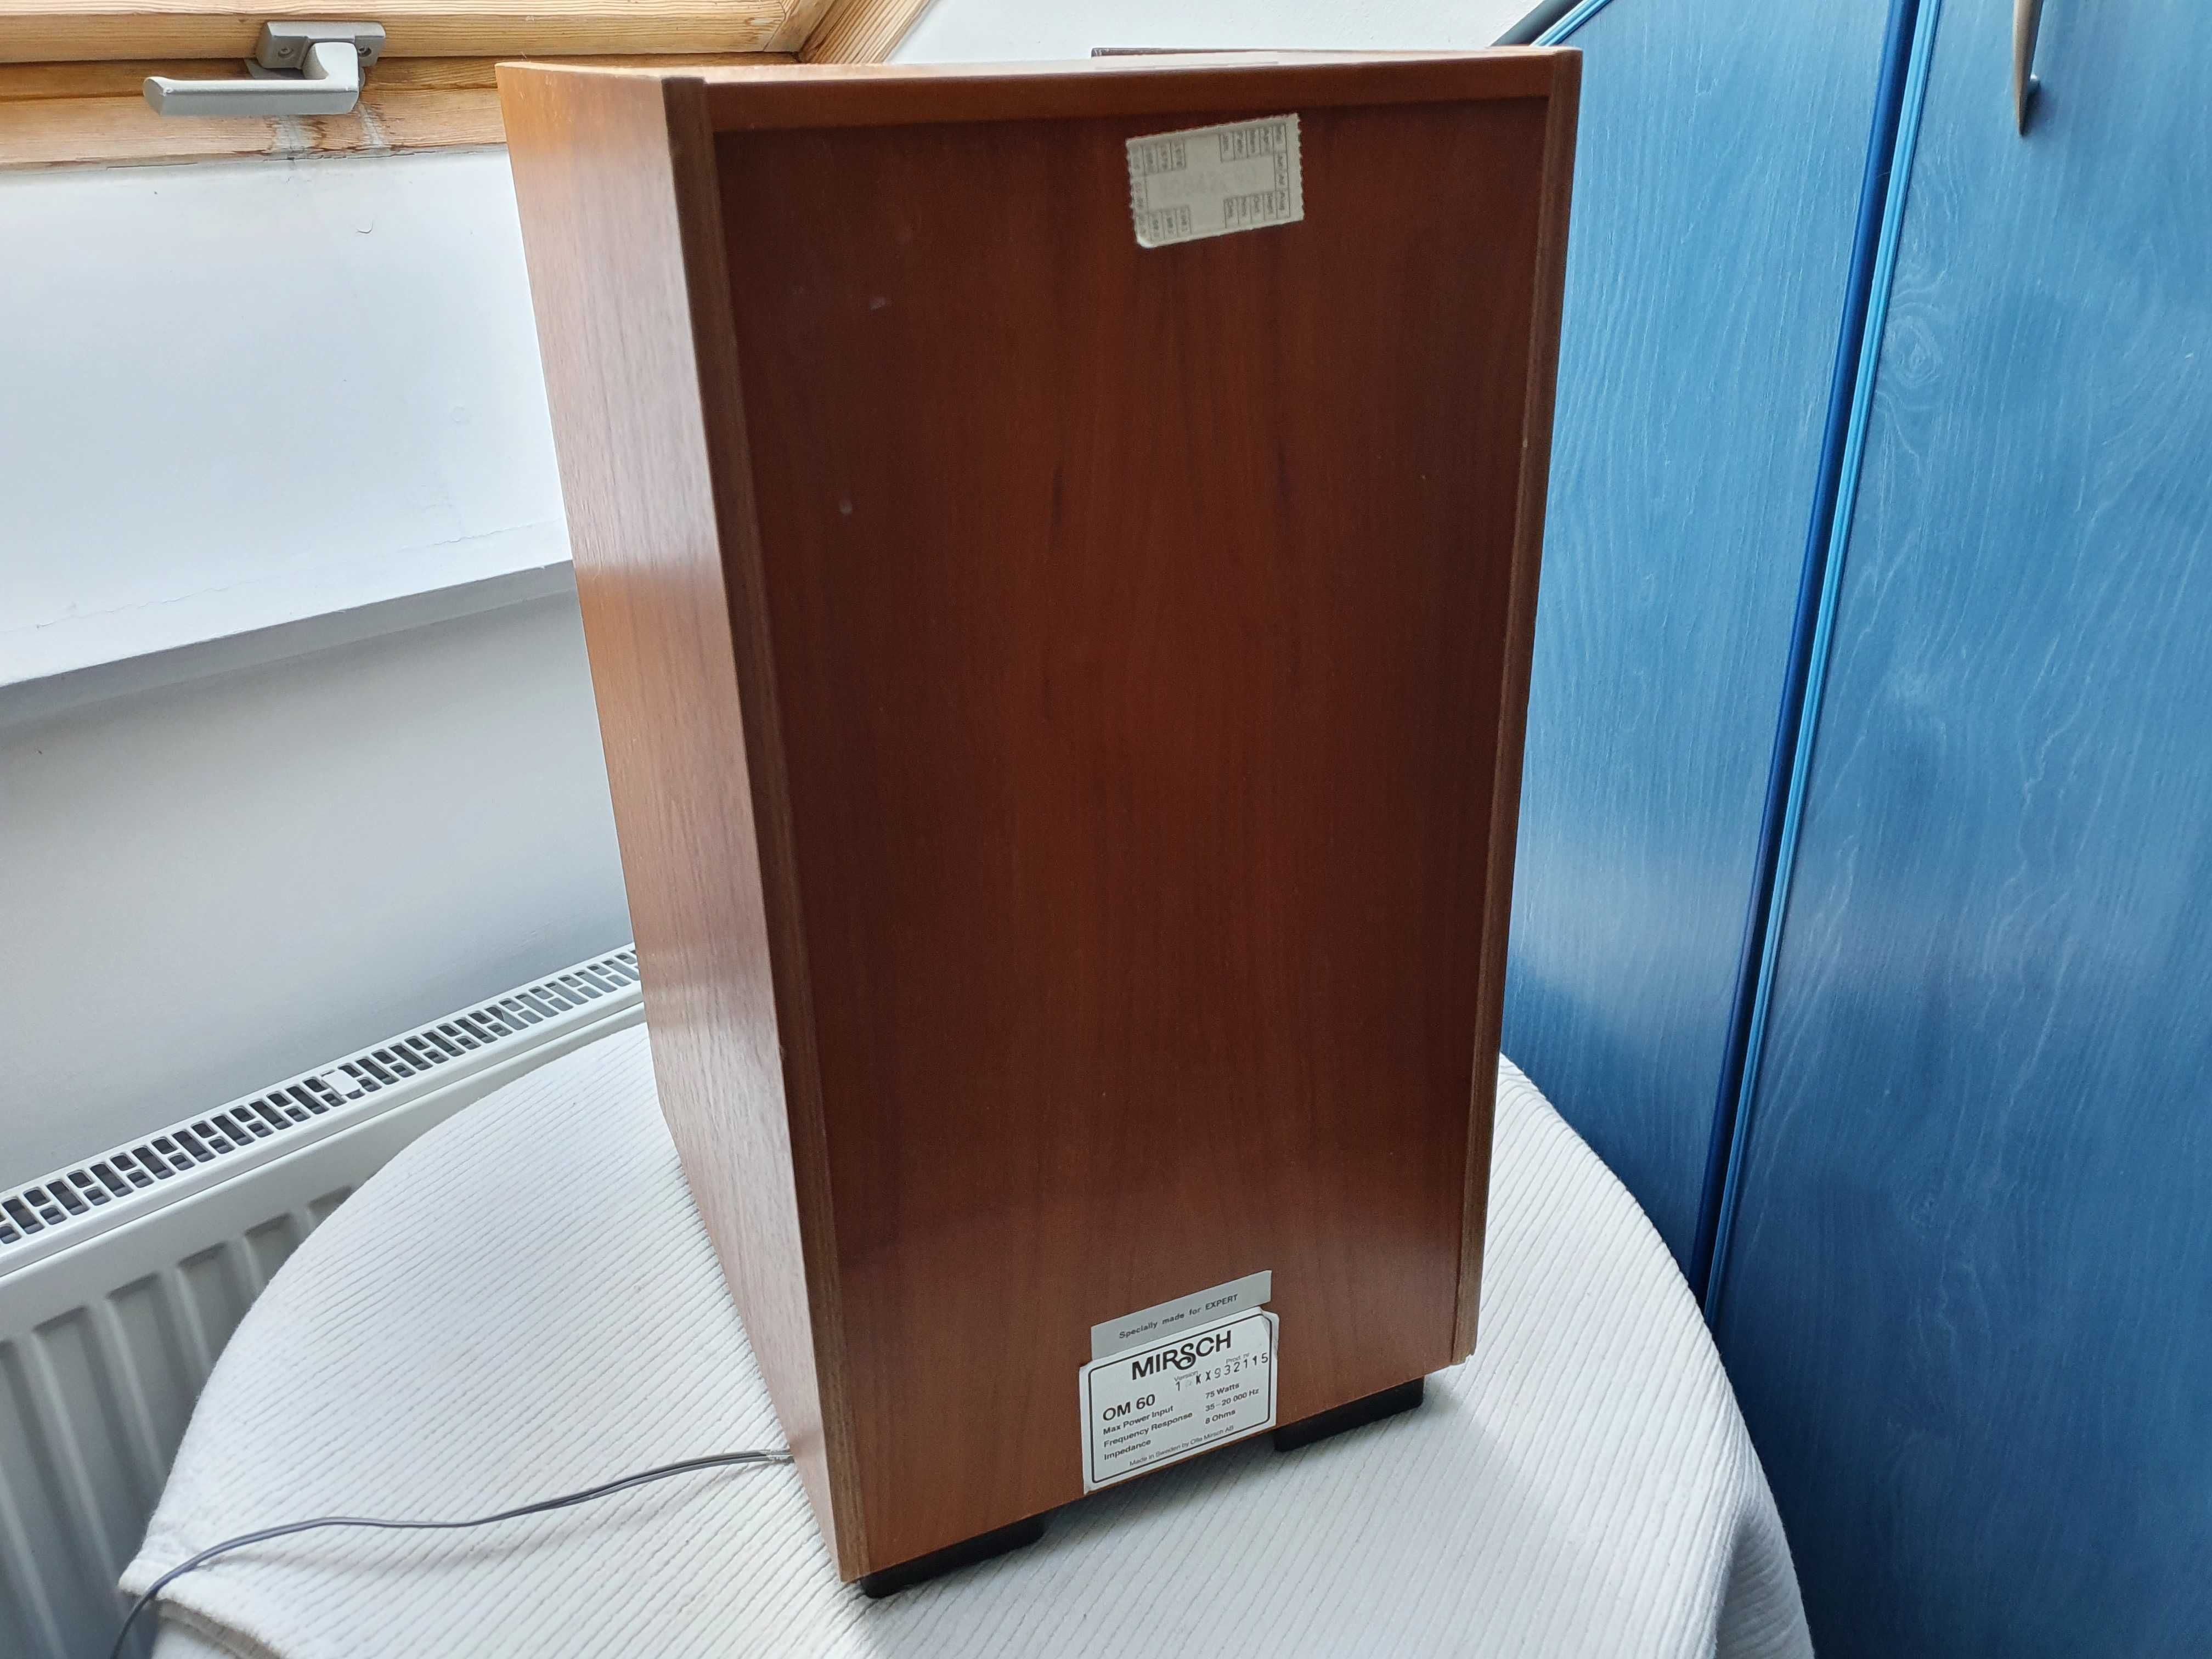 Mirsch OM-60 expert pro sound kolumny monitory vintage